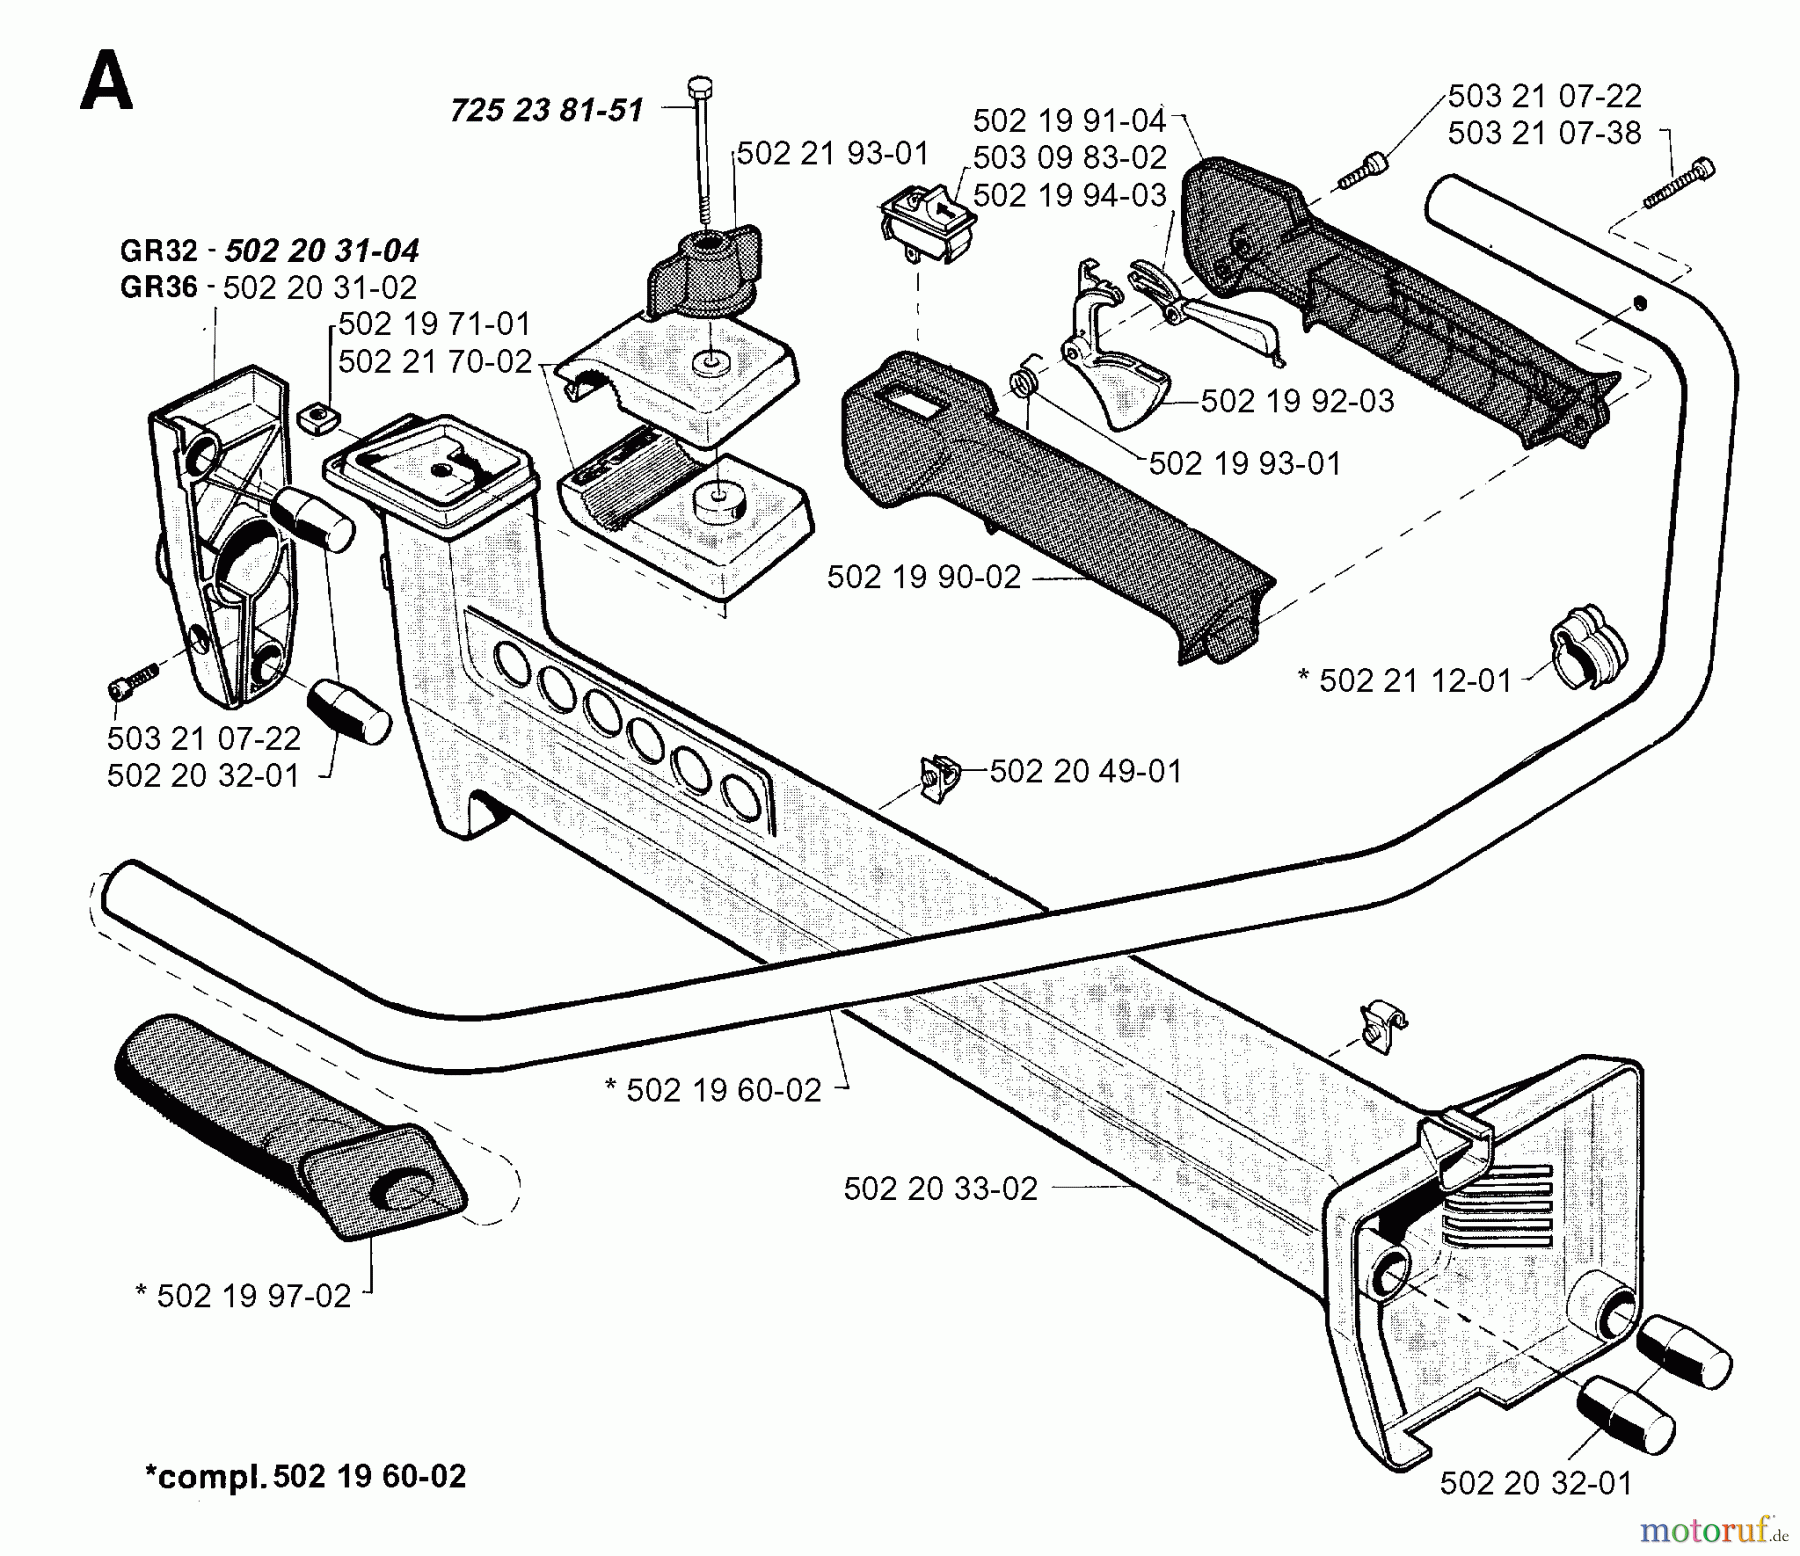  Jonsered Motorsensen, Trimmer GR32 - Jonsered String/Brush Trimmer (1994-02) HANDLE CONTROLS